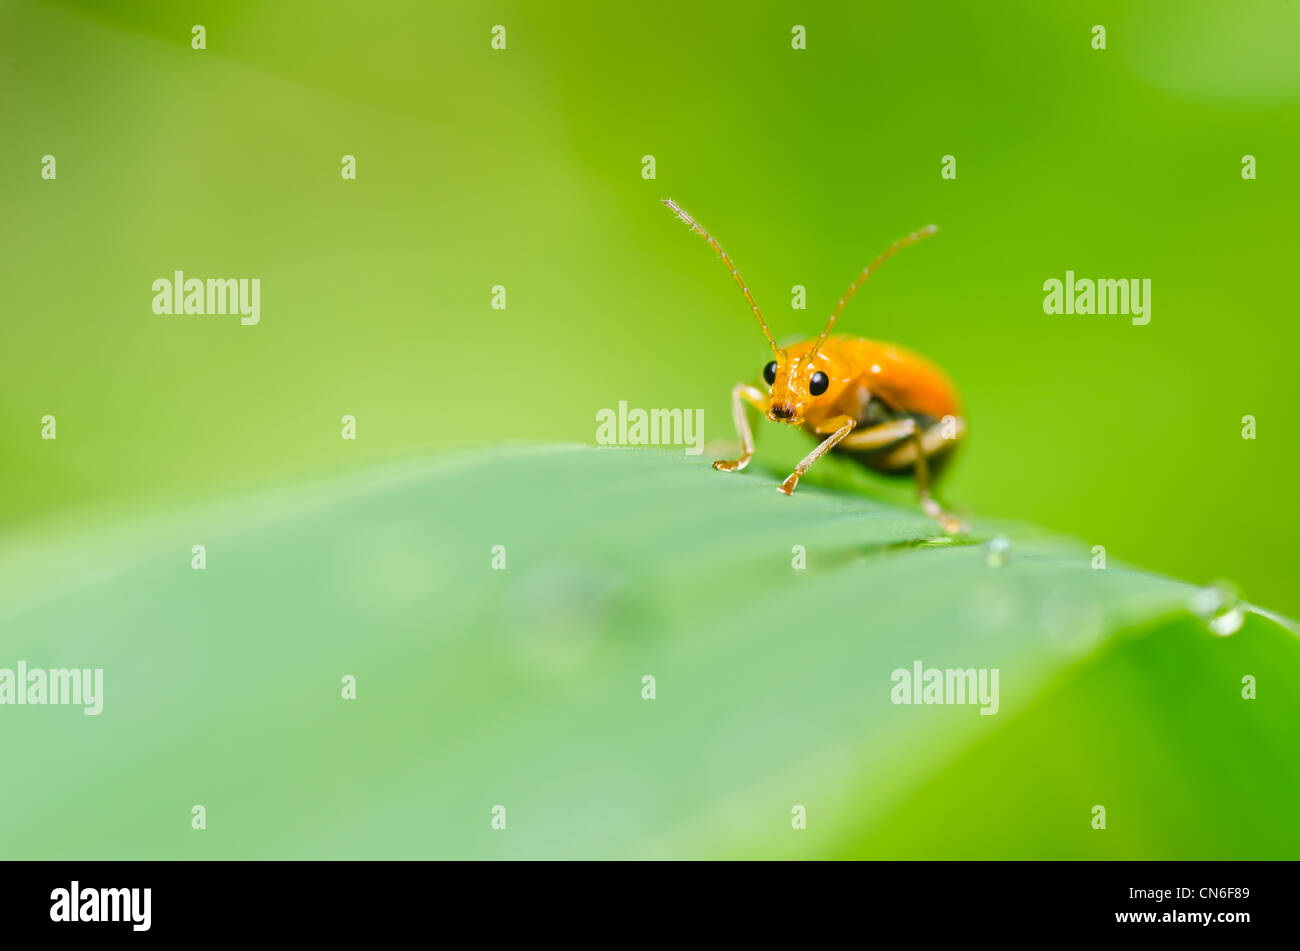 Orange Käfer in grüner Natur oder im Garten Stockfotografie - Alamy